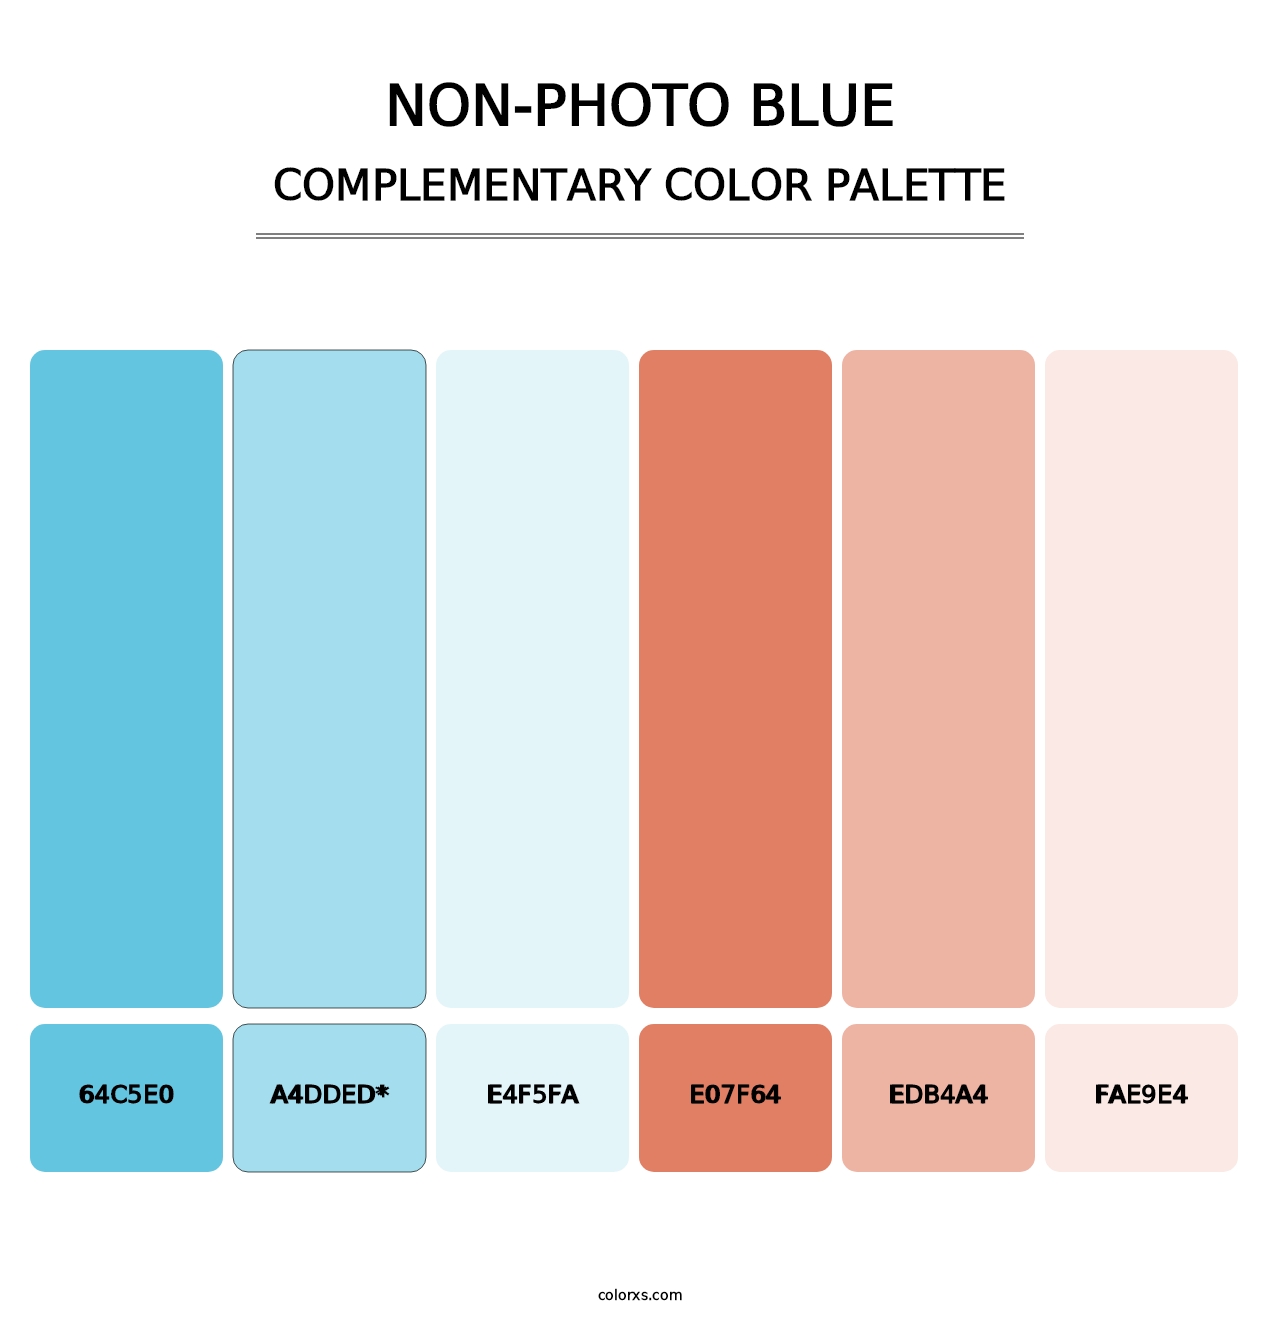 Non-photo Blue - Complementary Color Palette